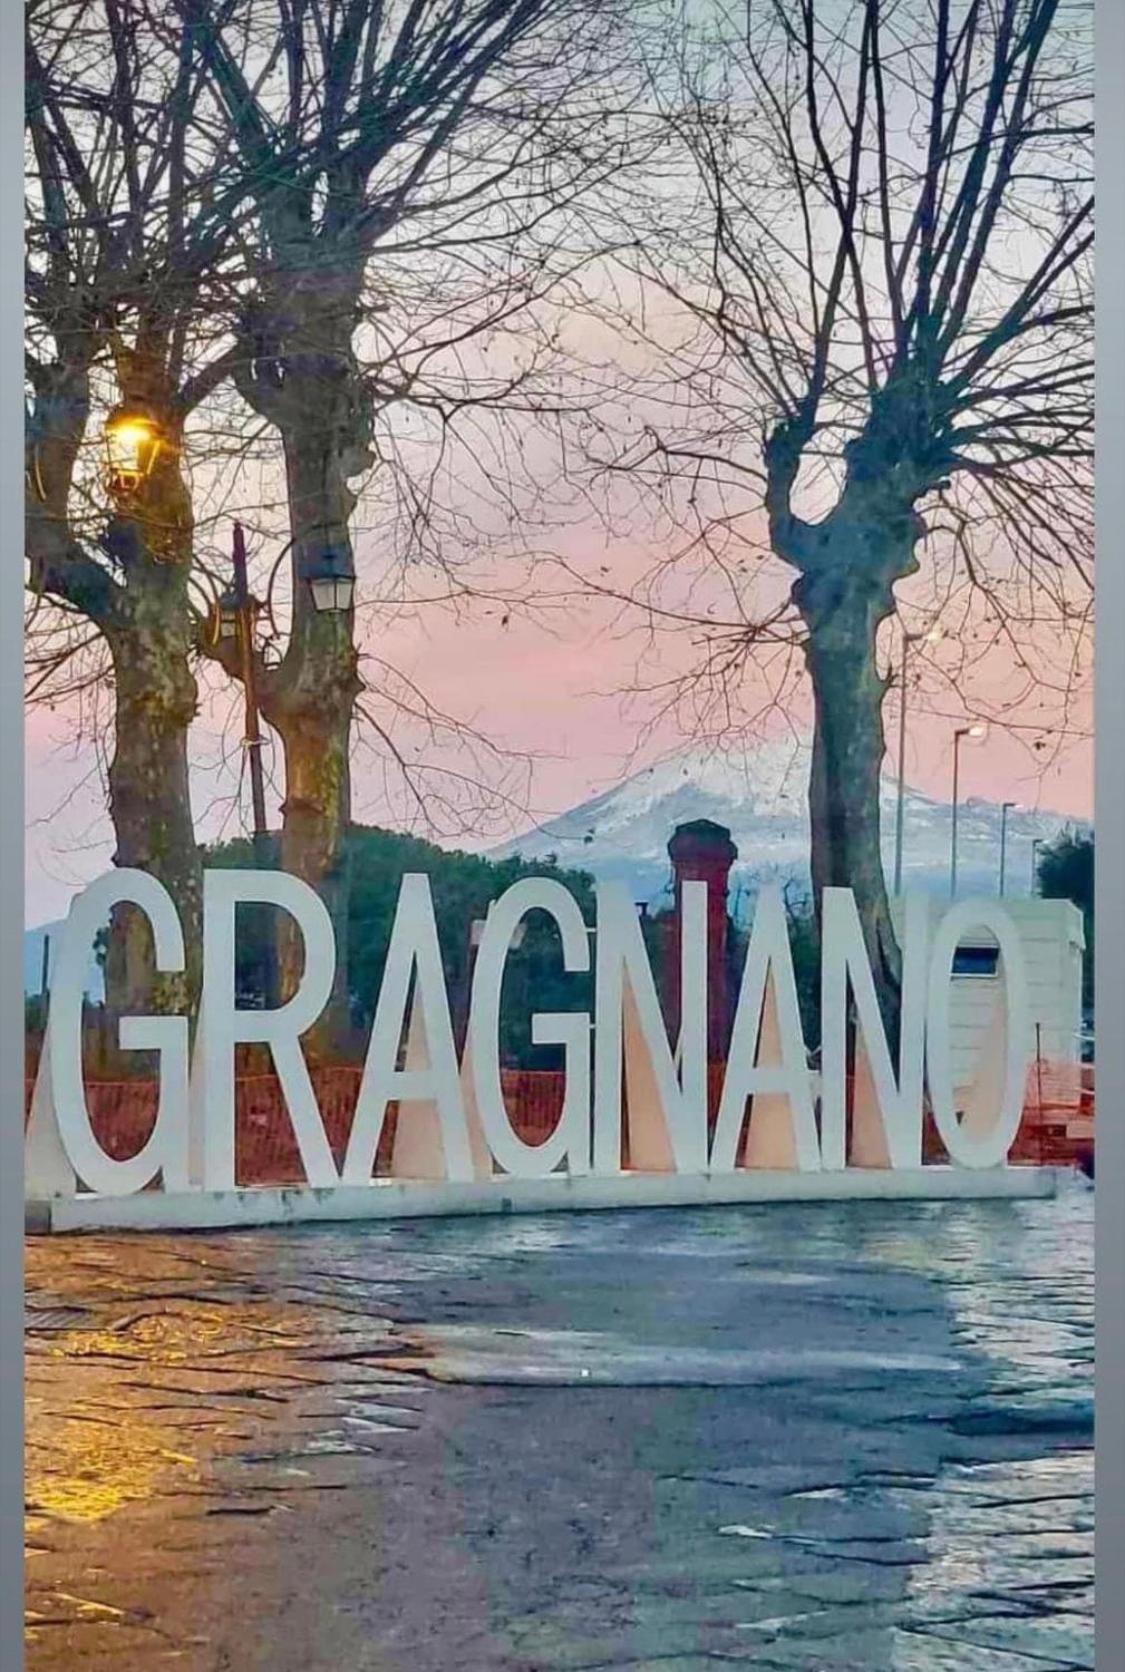 Granoro Gragnano B&B 外观 照片